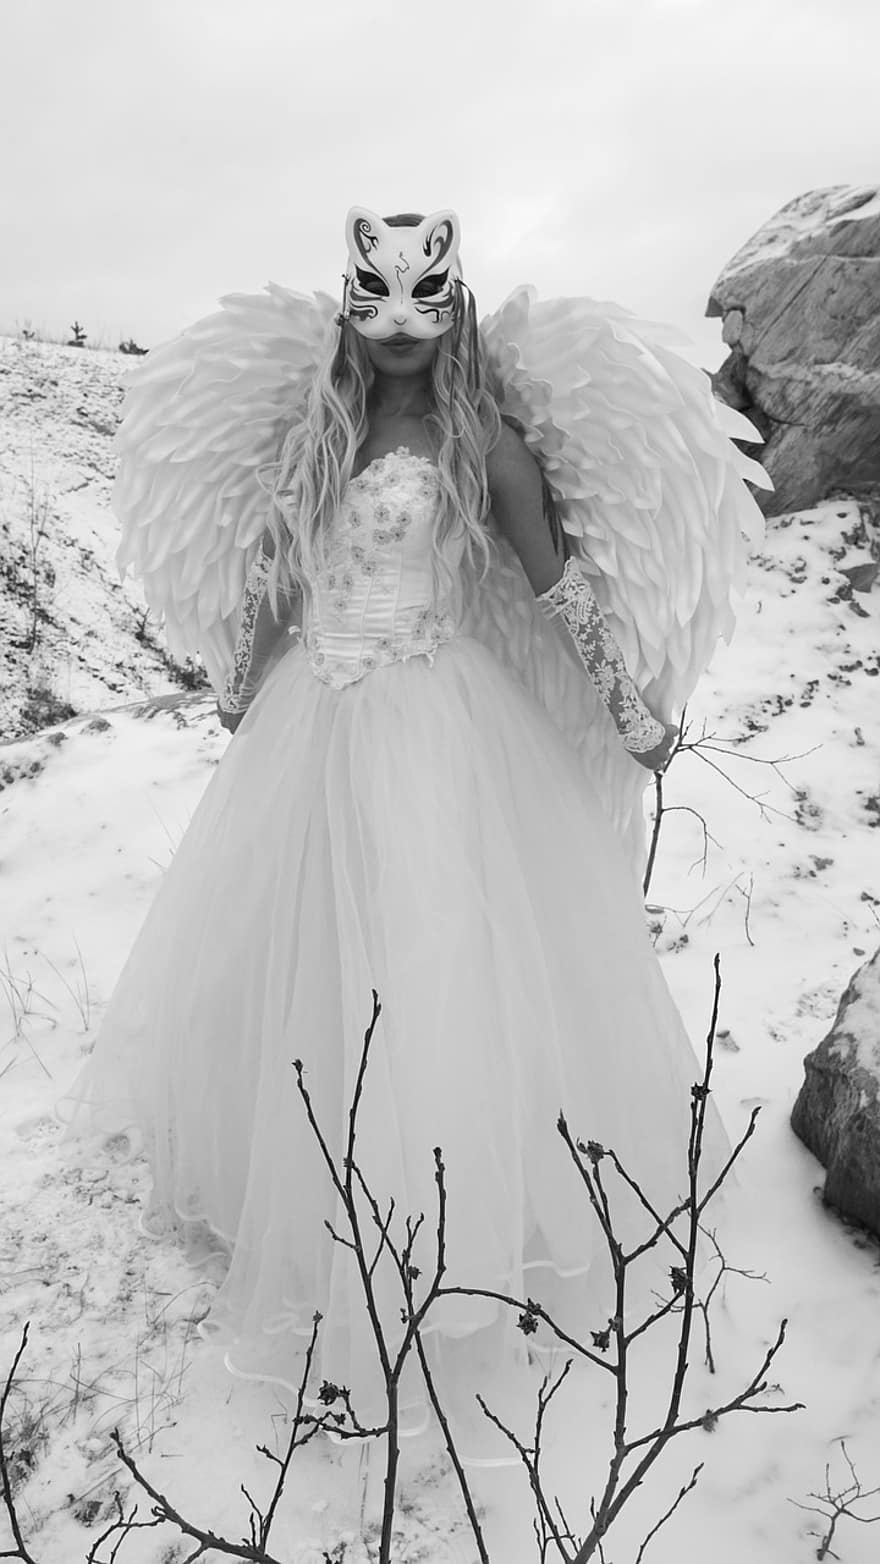 Wings, Angel, Dress, Story, Fantasy, Winter, Snow